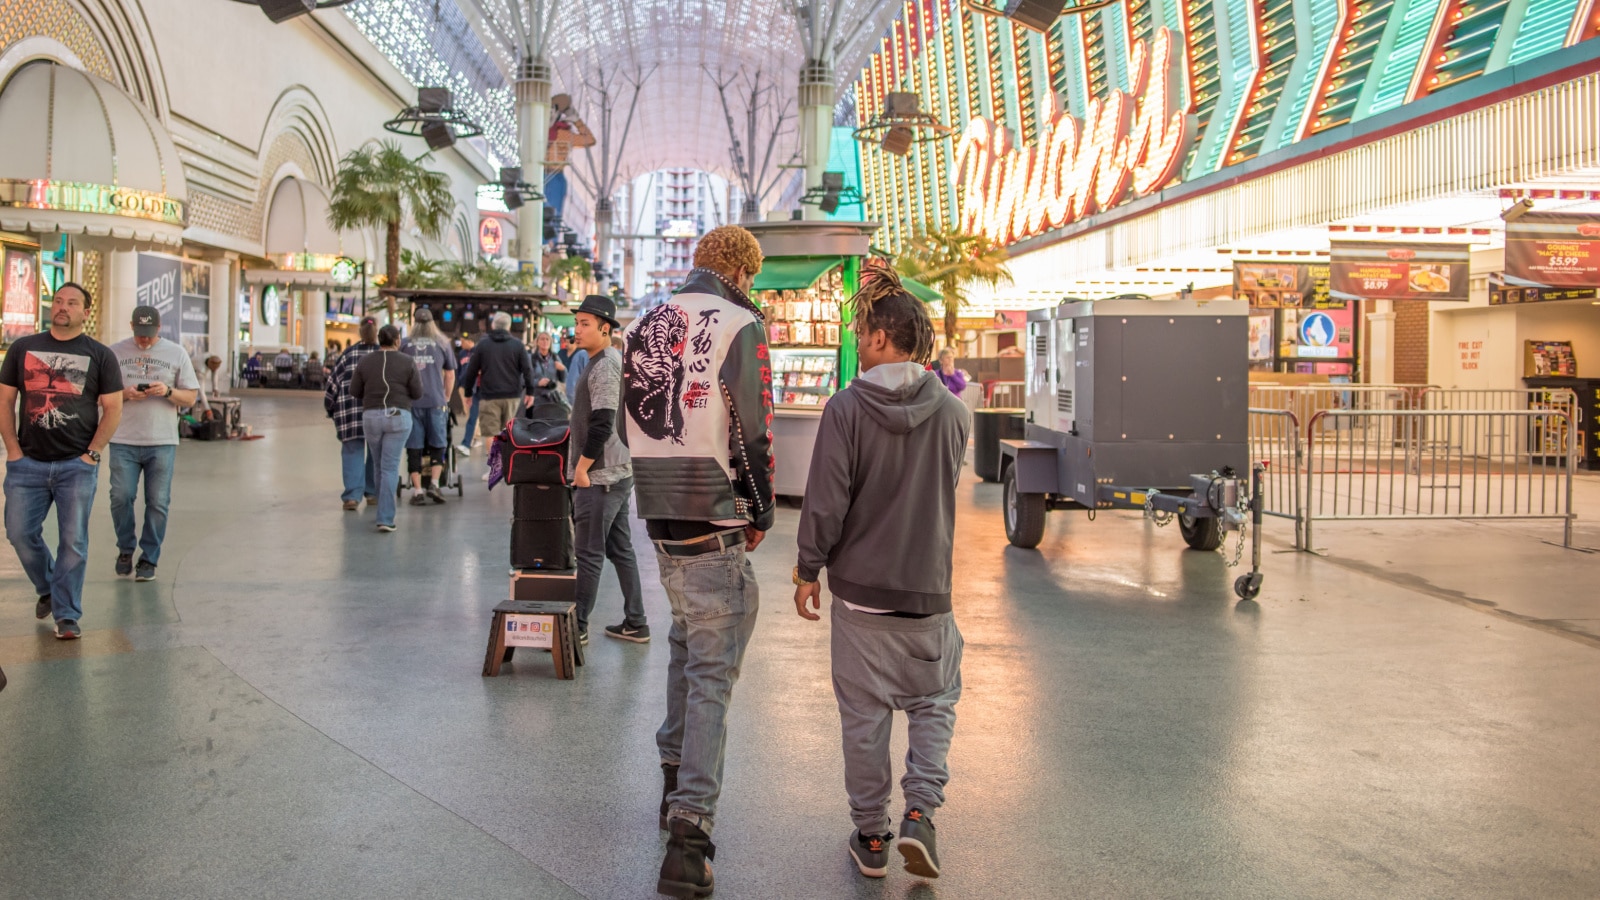 Las Vegas, NV / USA - March 6, 2018: Very stylish young men wearing trendy clothing walk along Fremont Street Experience, downtown Las Vegas.